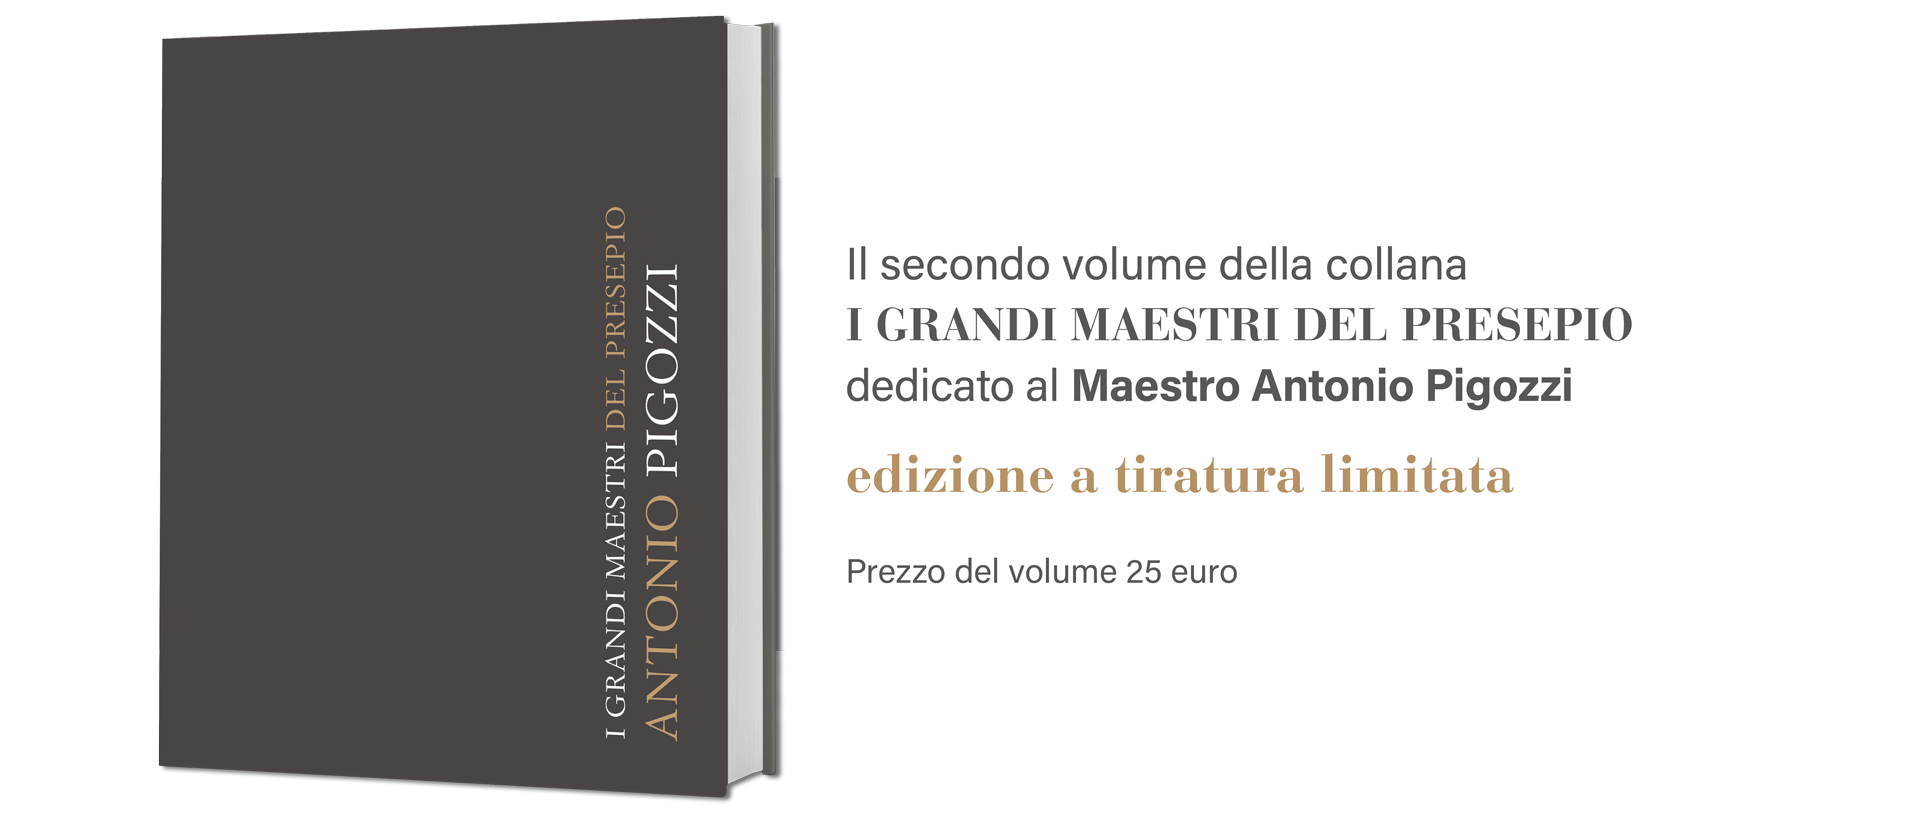 I grandi maestri del presepio - secondo volume dedicato al Maestro Antonio Pigozzi